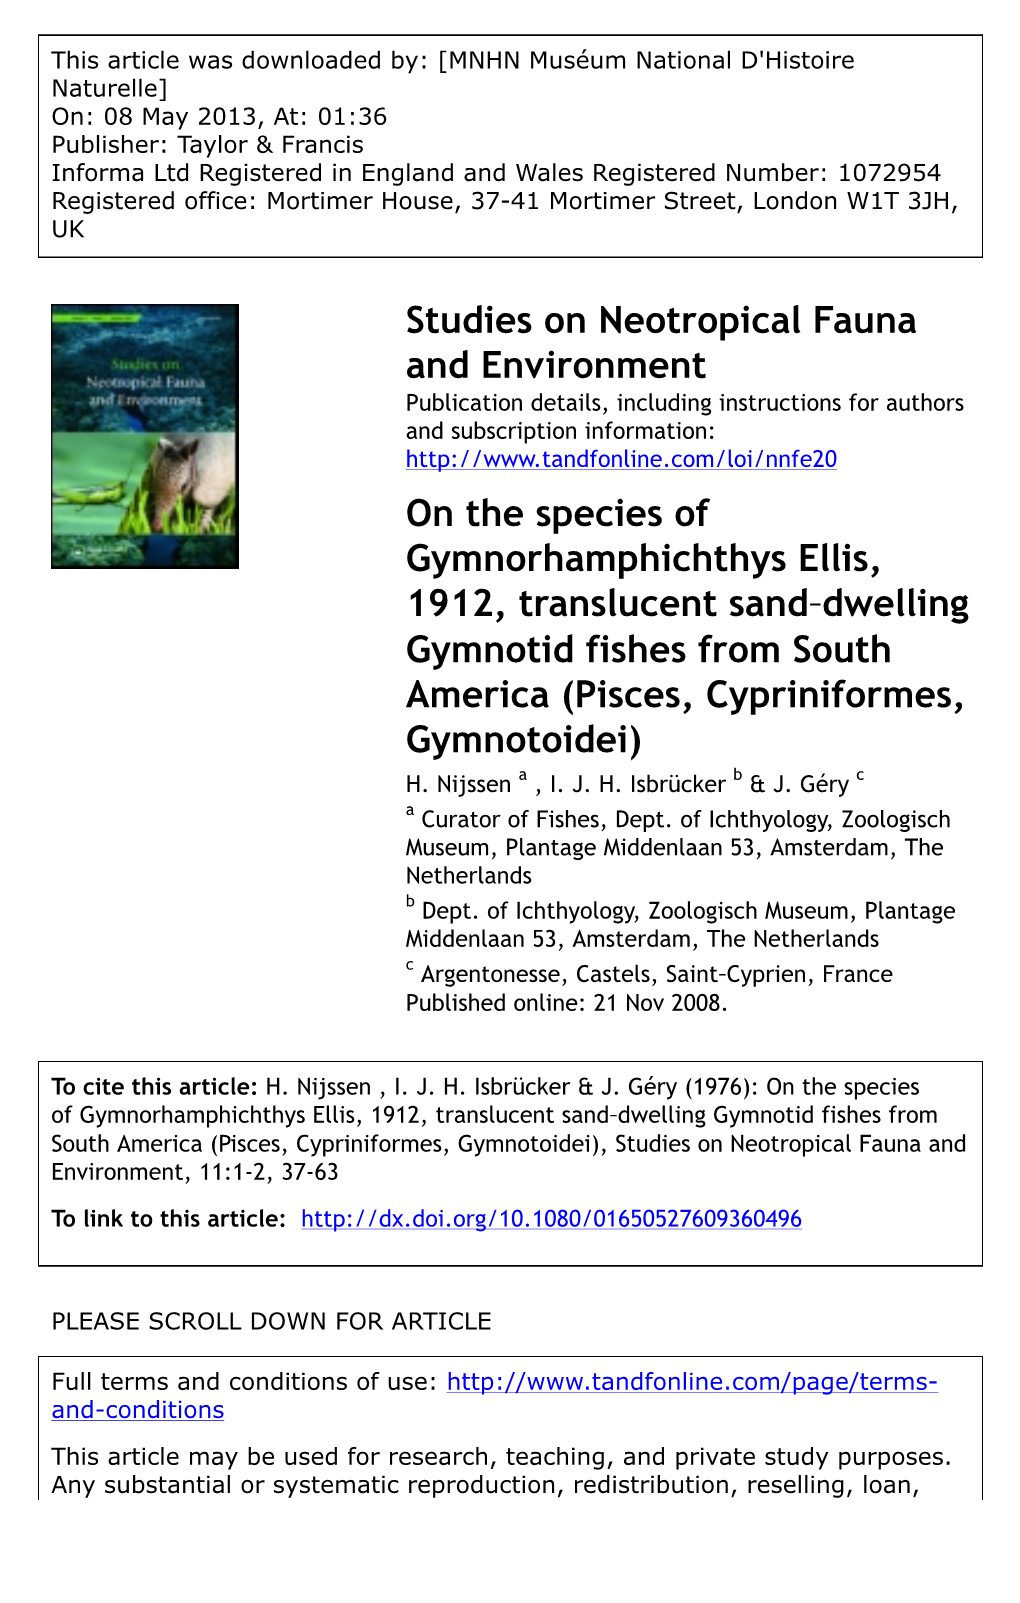 On the Species of Gymnorhamphichthys Ellis, 1912, Translucent Sand‐Dwelling Gymnotid Fishes from South America (Pisces, Cypriniformes, Gymnotoidei) H